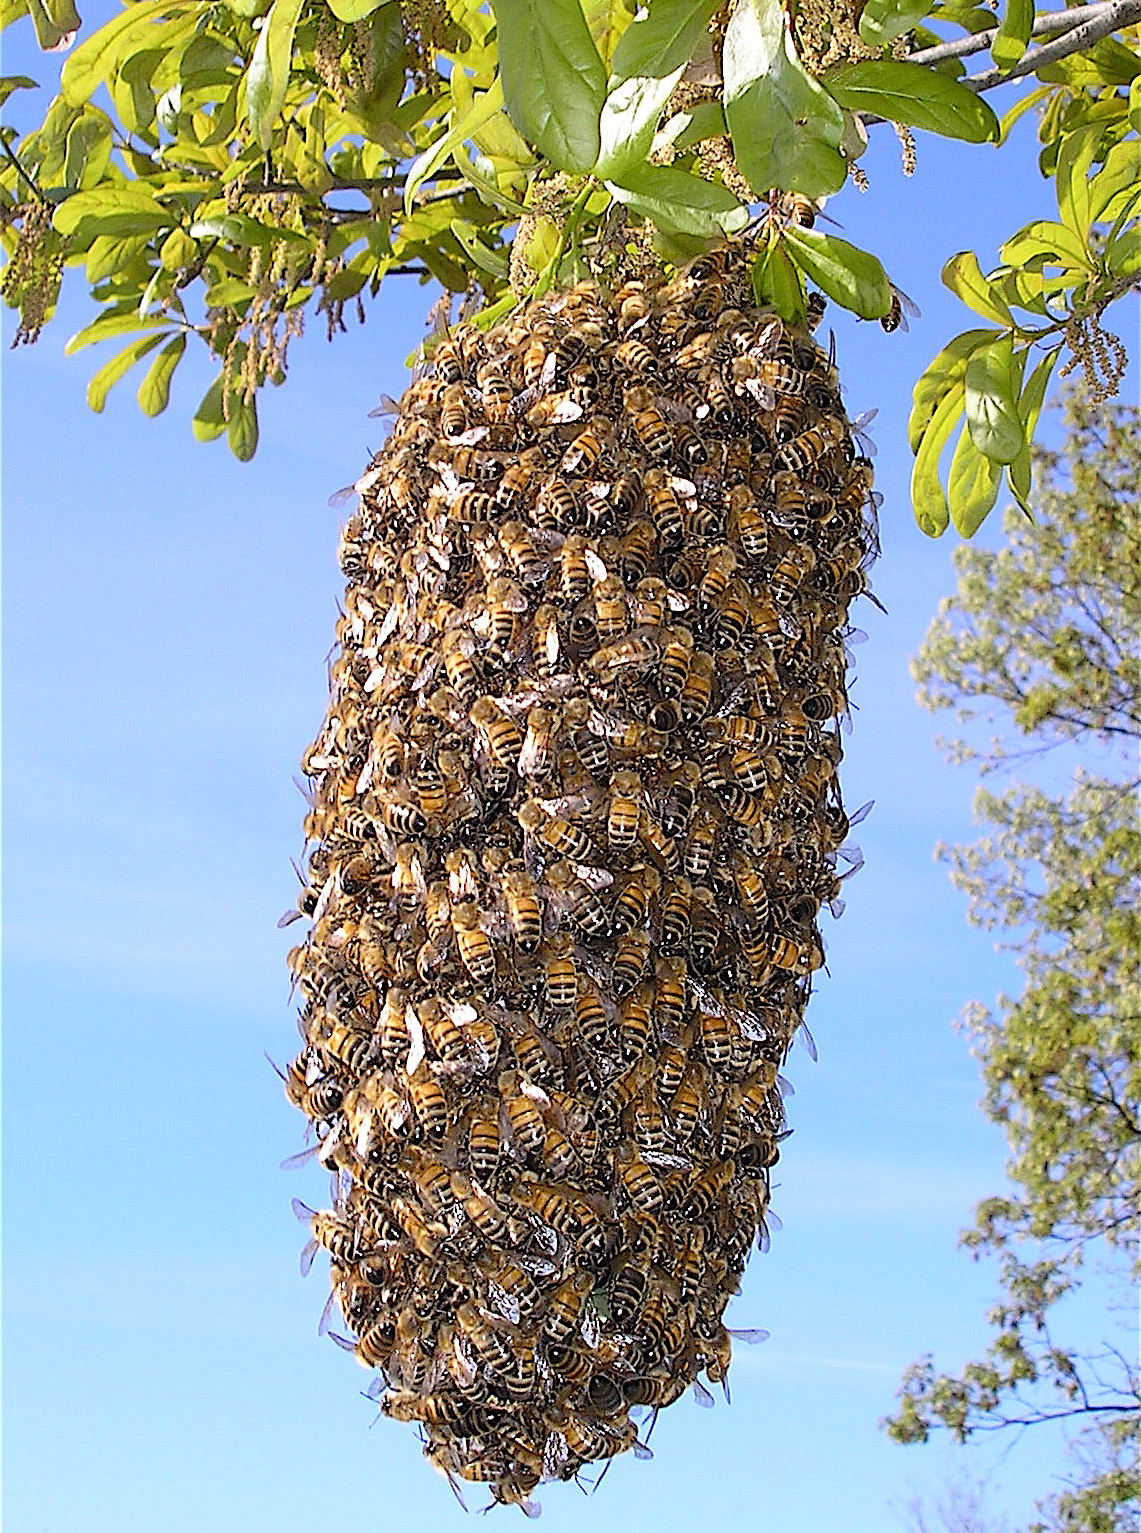 catching-swarms-video-tutorial-keeping-backyard-bees